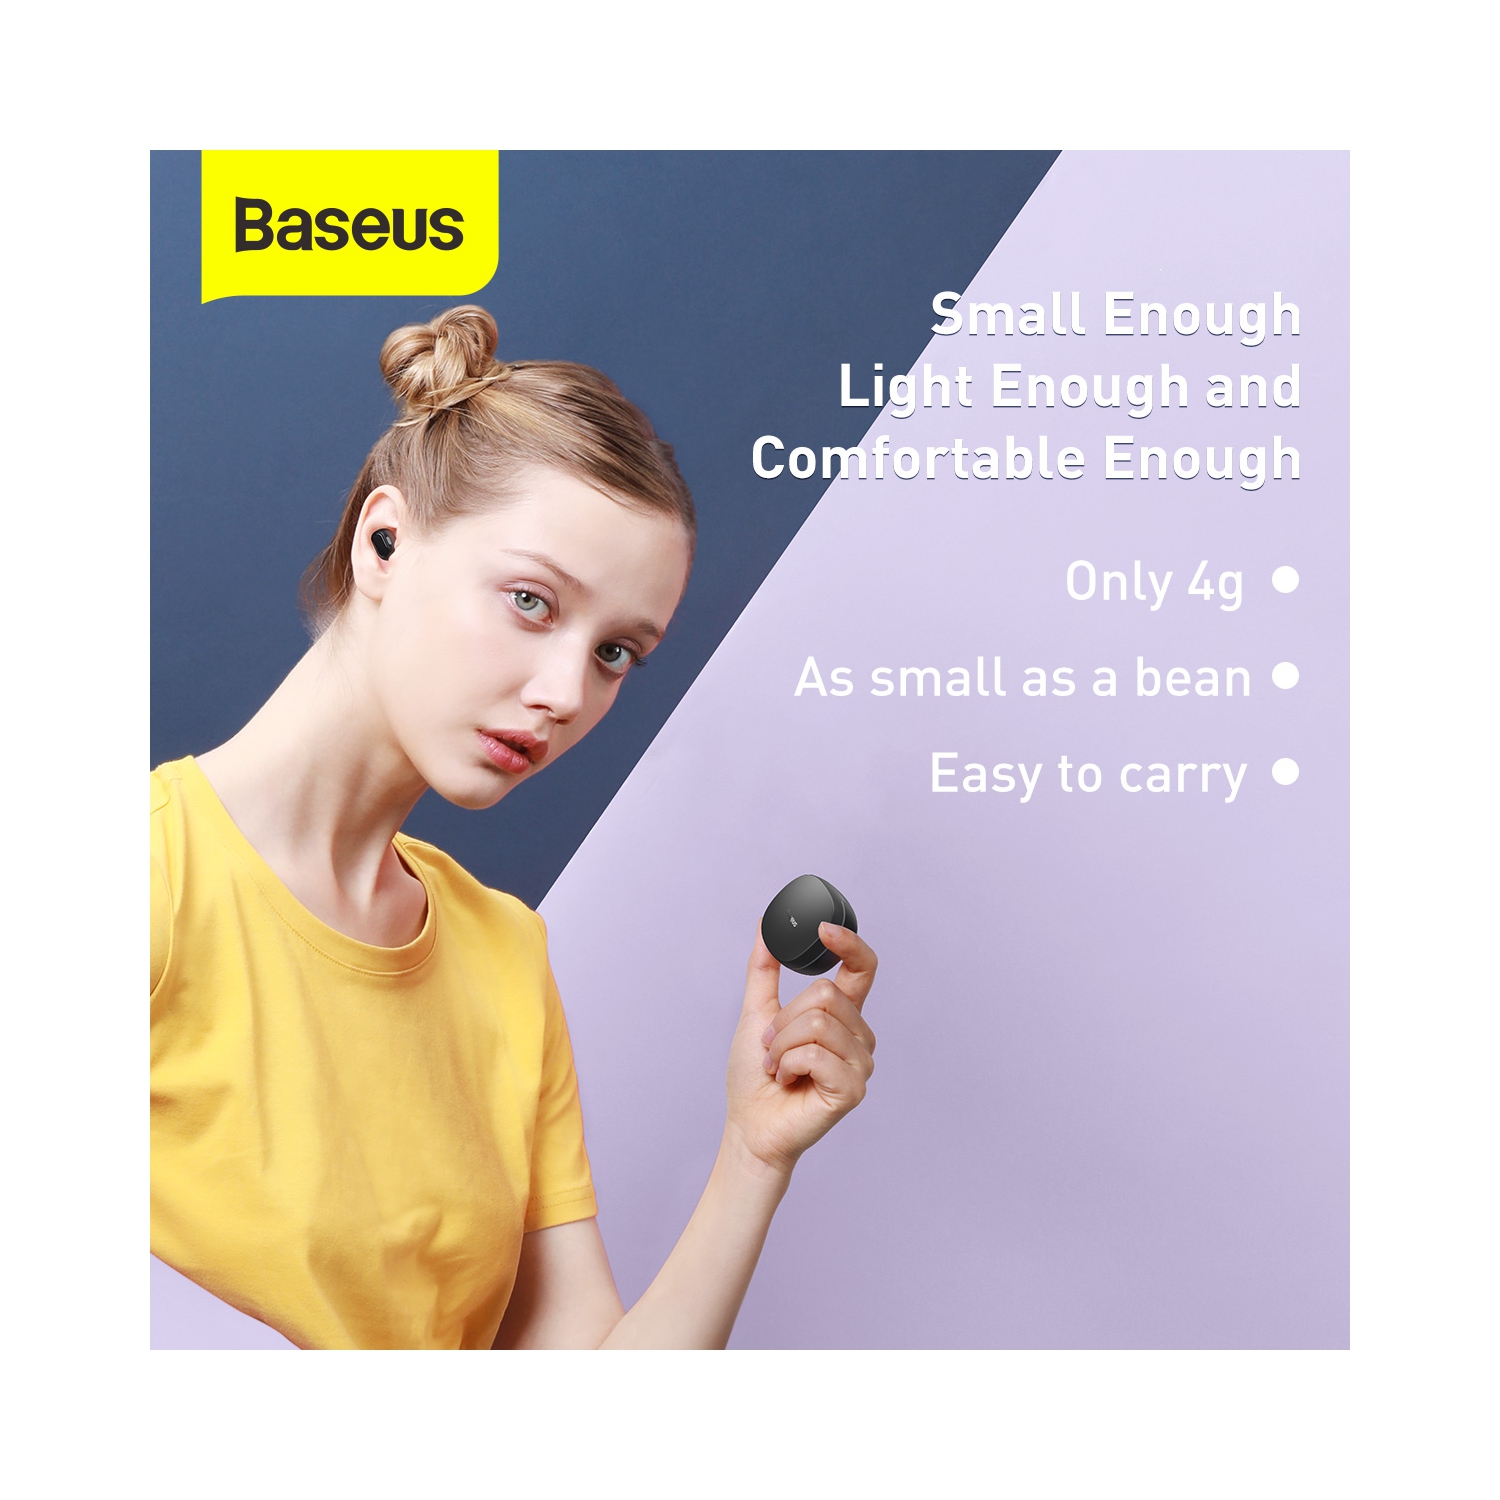 Baseus Bluetooth Headset, Ear Headphone, Wireless Headphone